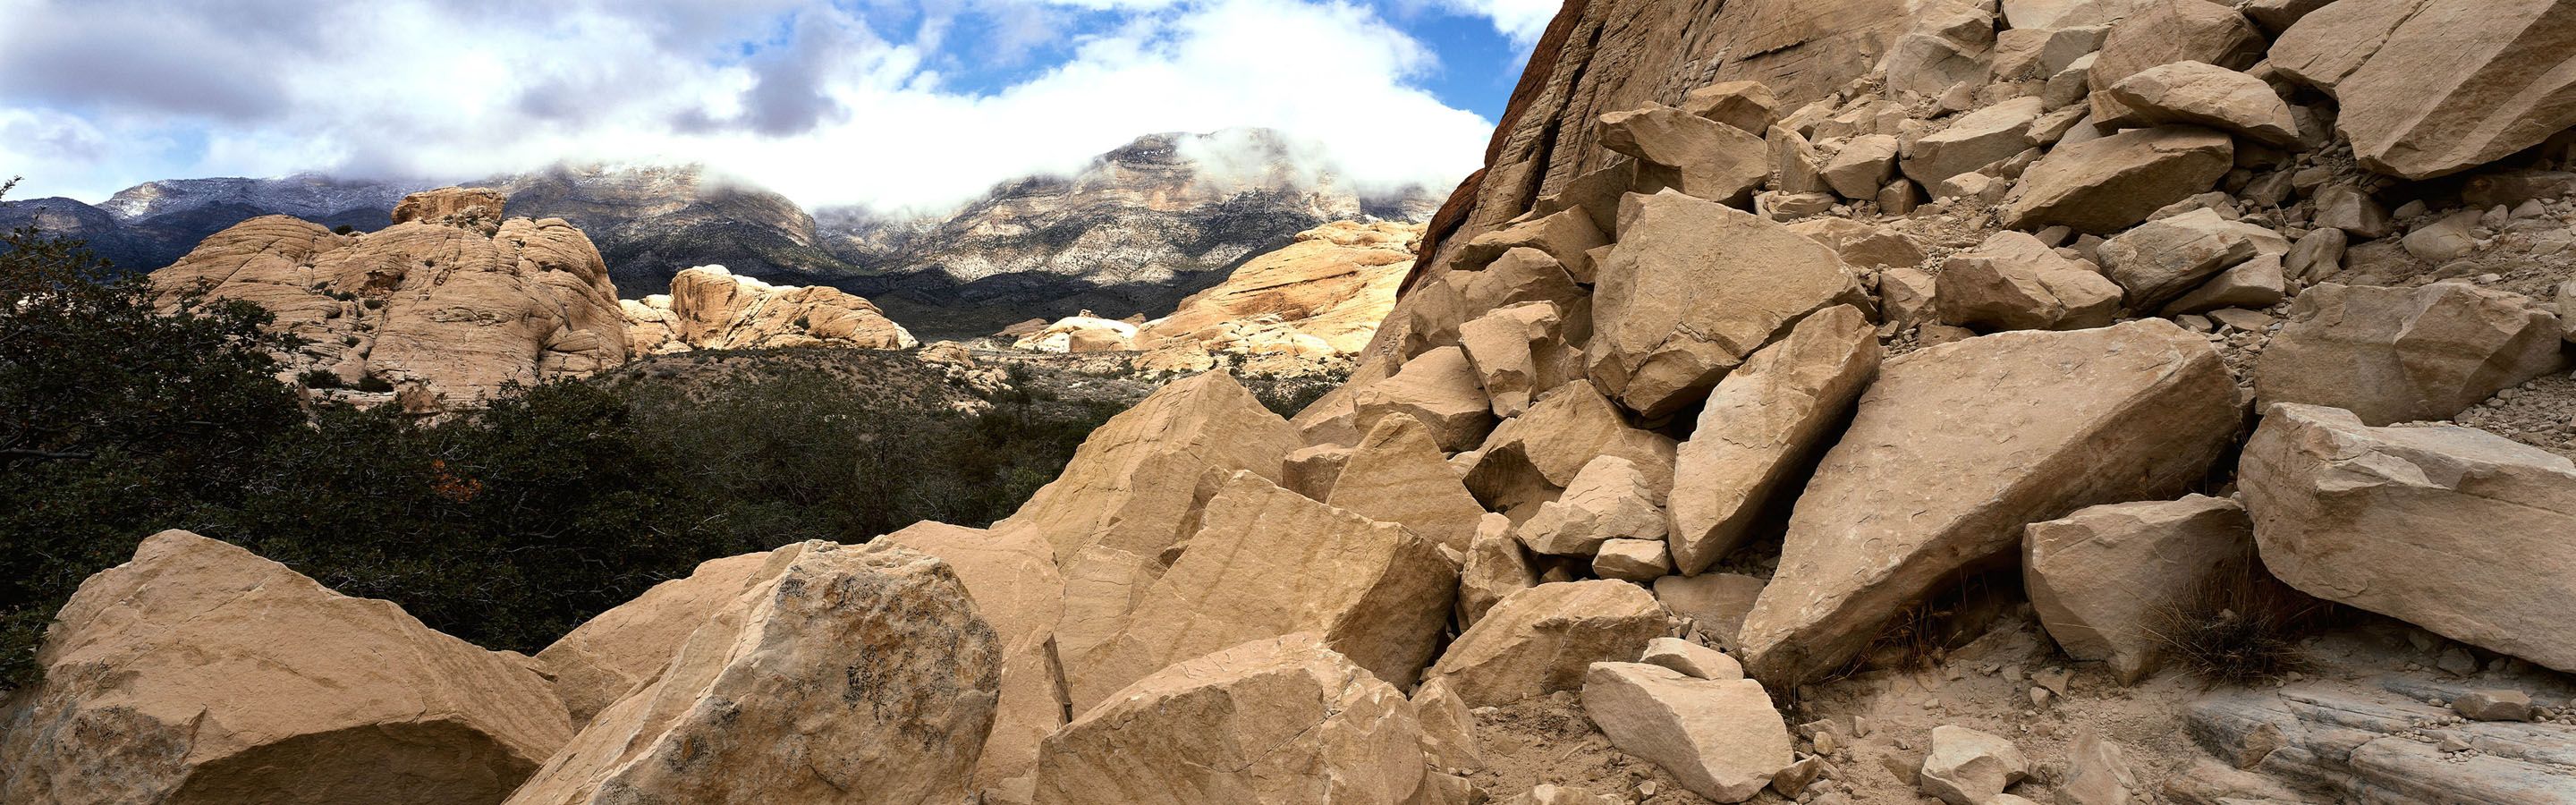 Boulders Background